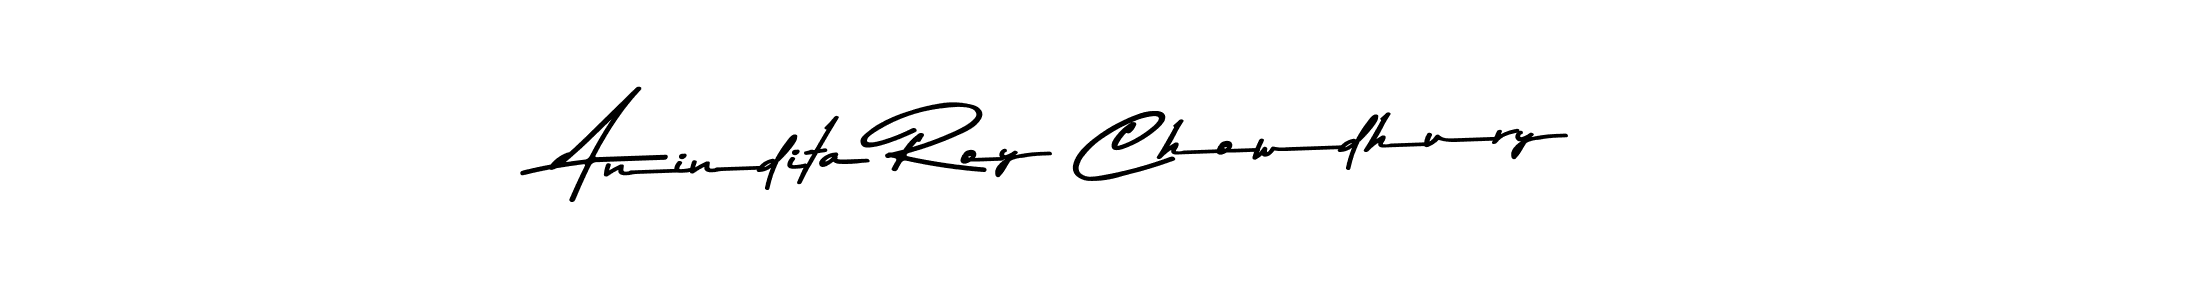 Anindita Roy Chowdhury stylish signature style. Best Handwritten Sign (Asem Kandis PERSONAL USE) for my name. Handwritten Signature Collection Ideas for my name Anindita Roy Chowdhury. Anindita Roy Chowdhury signature style 9 images and pictures png